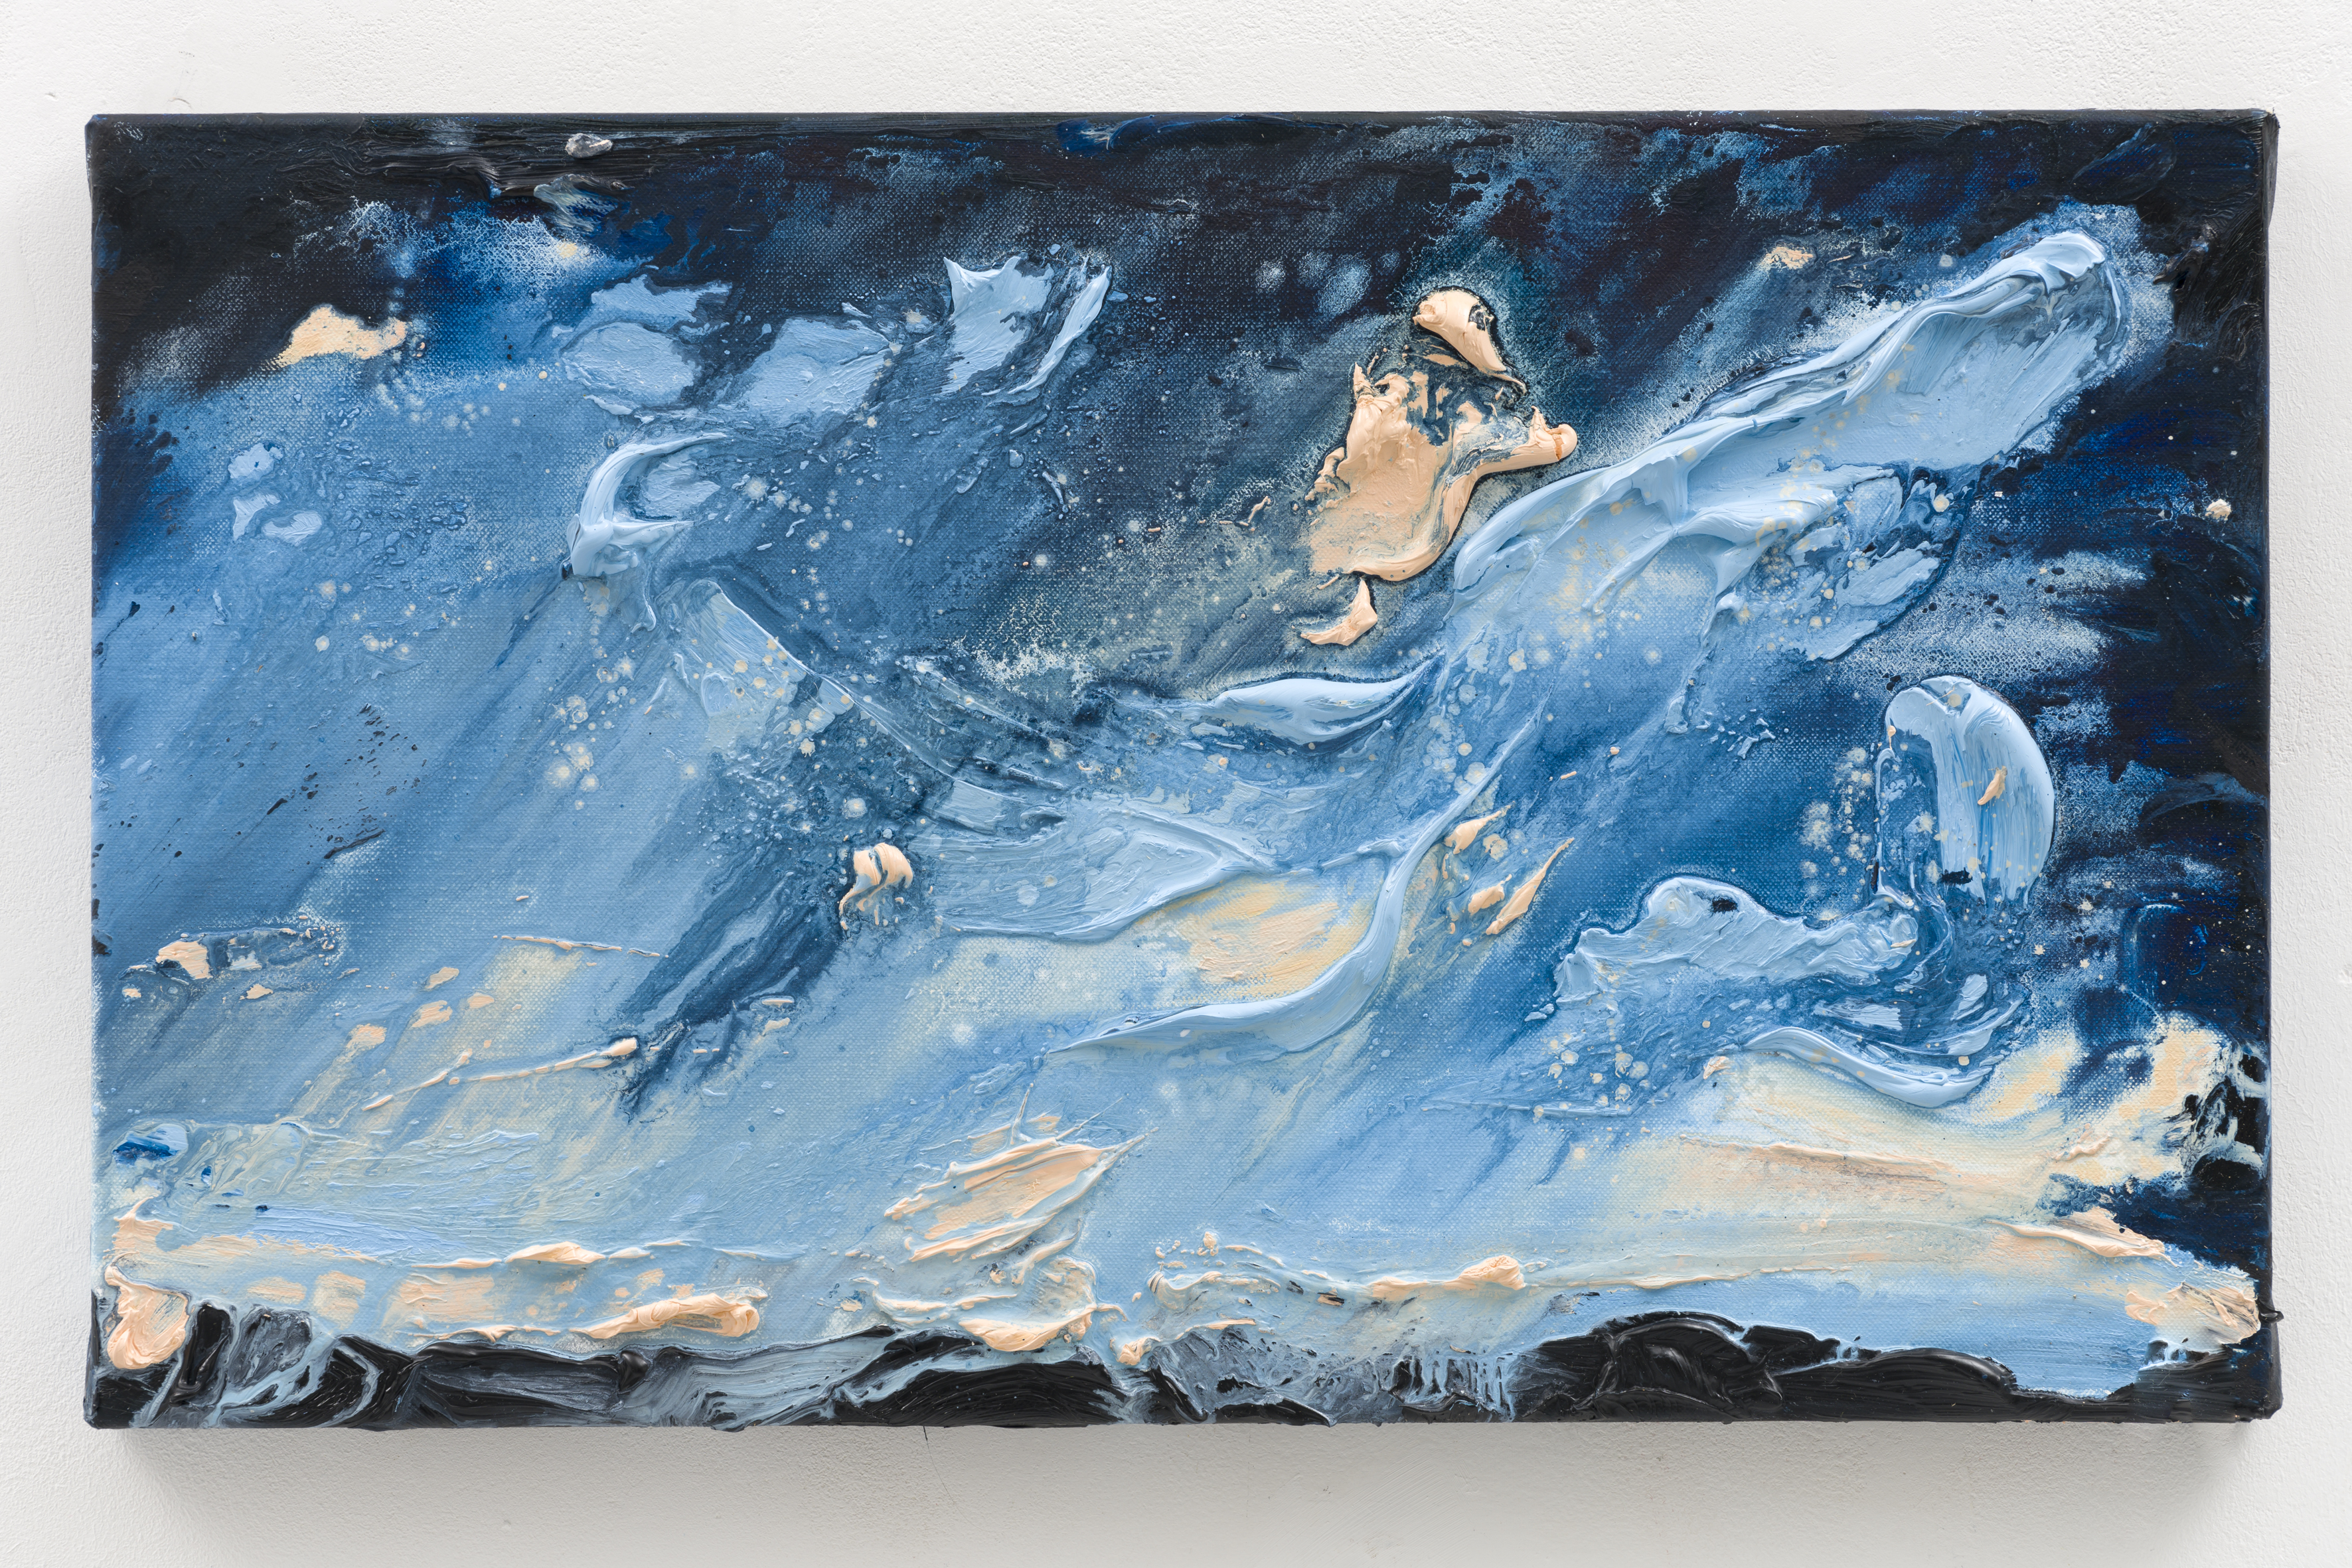 "Night Rises, Turrells Partituur V", 30 x 50 cm., oil on linen 2020 (Berlin)